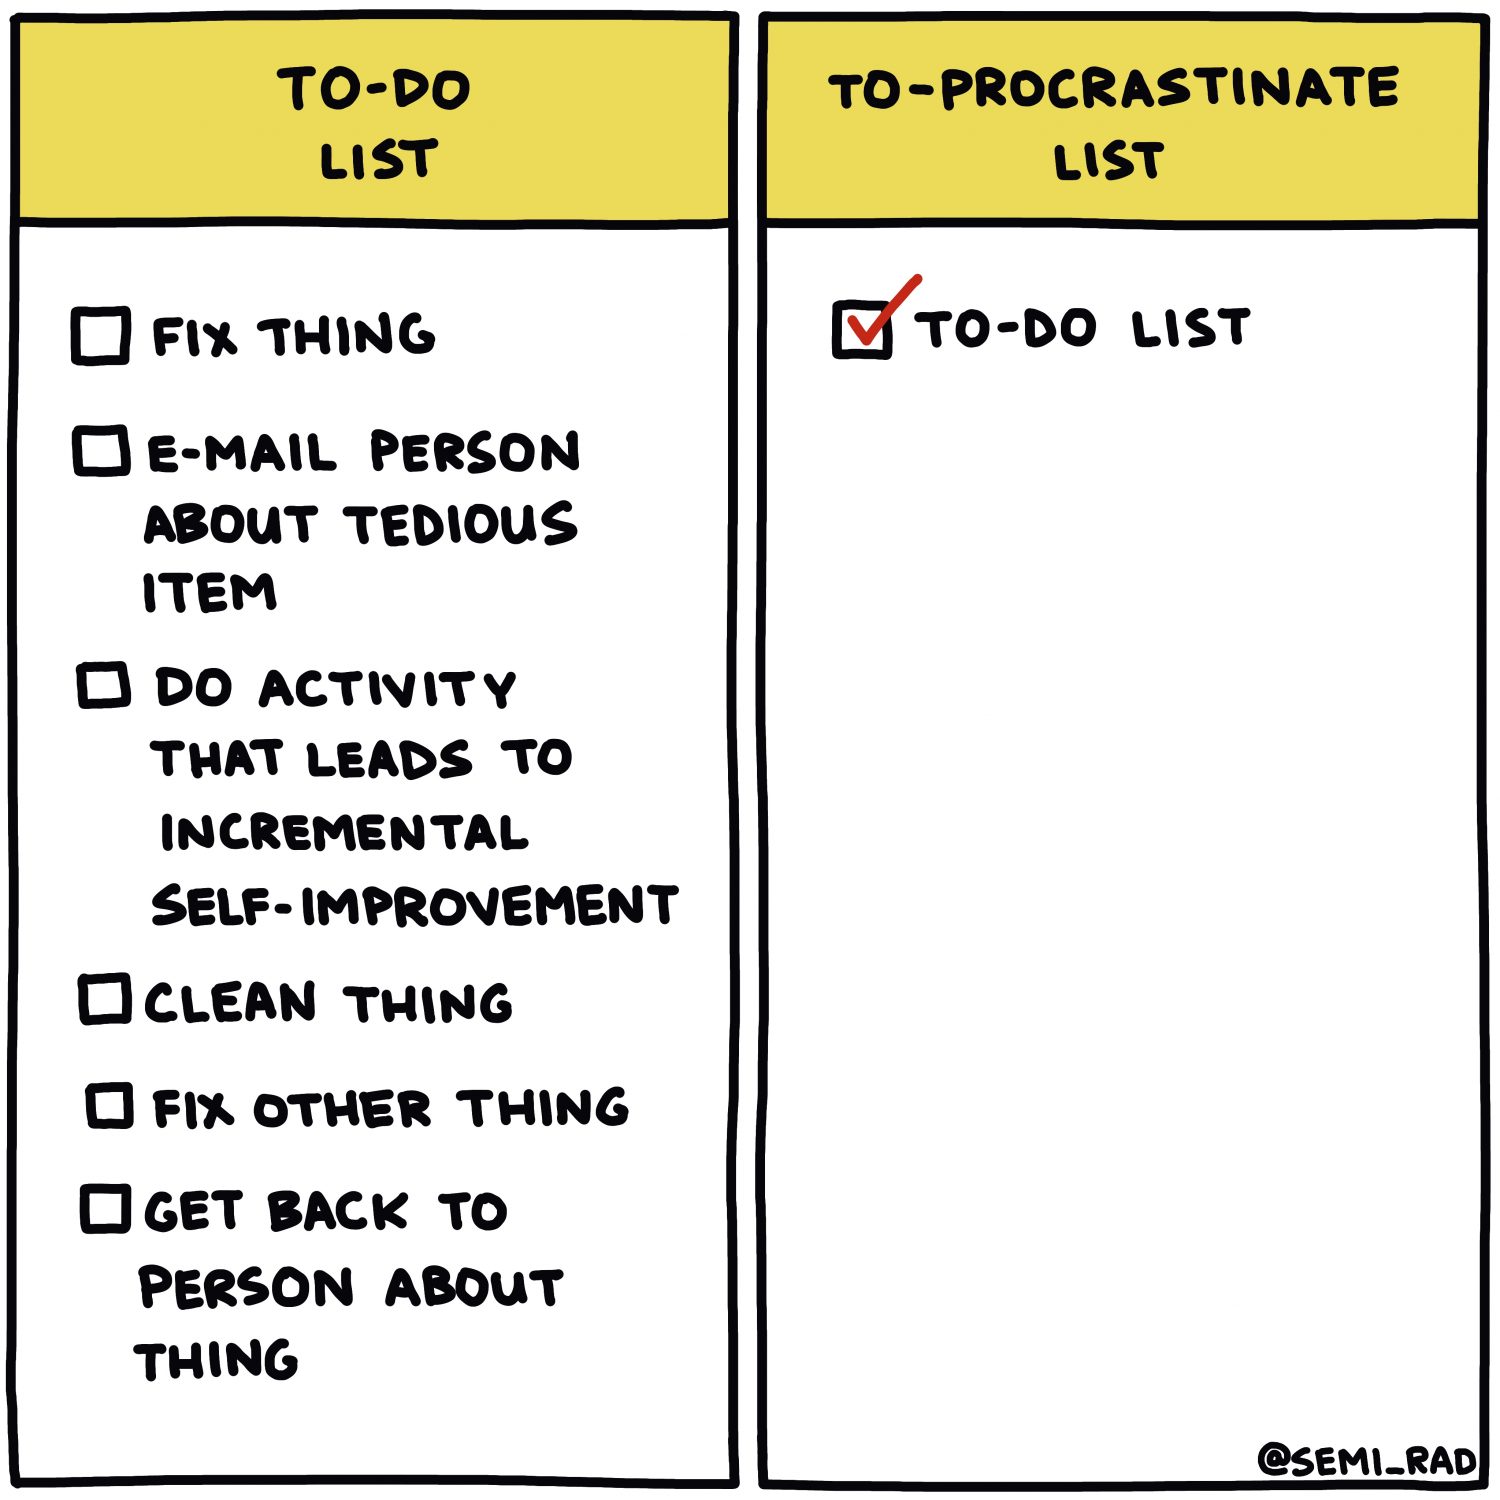 To-Do List Vs. To-Procrastinate List